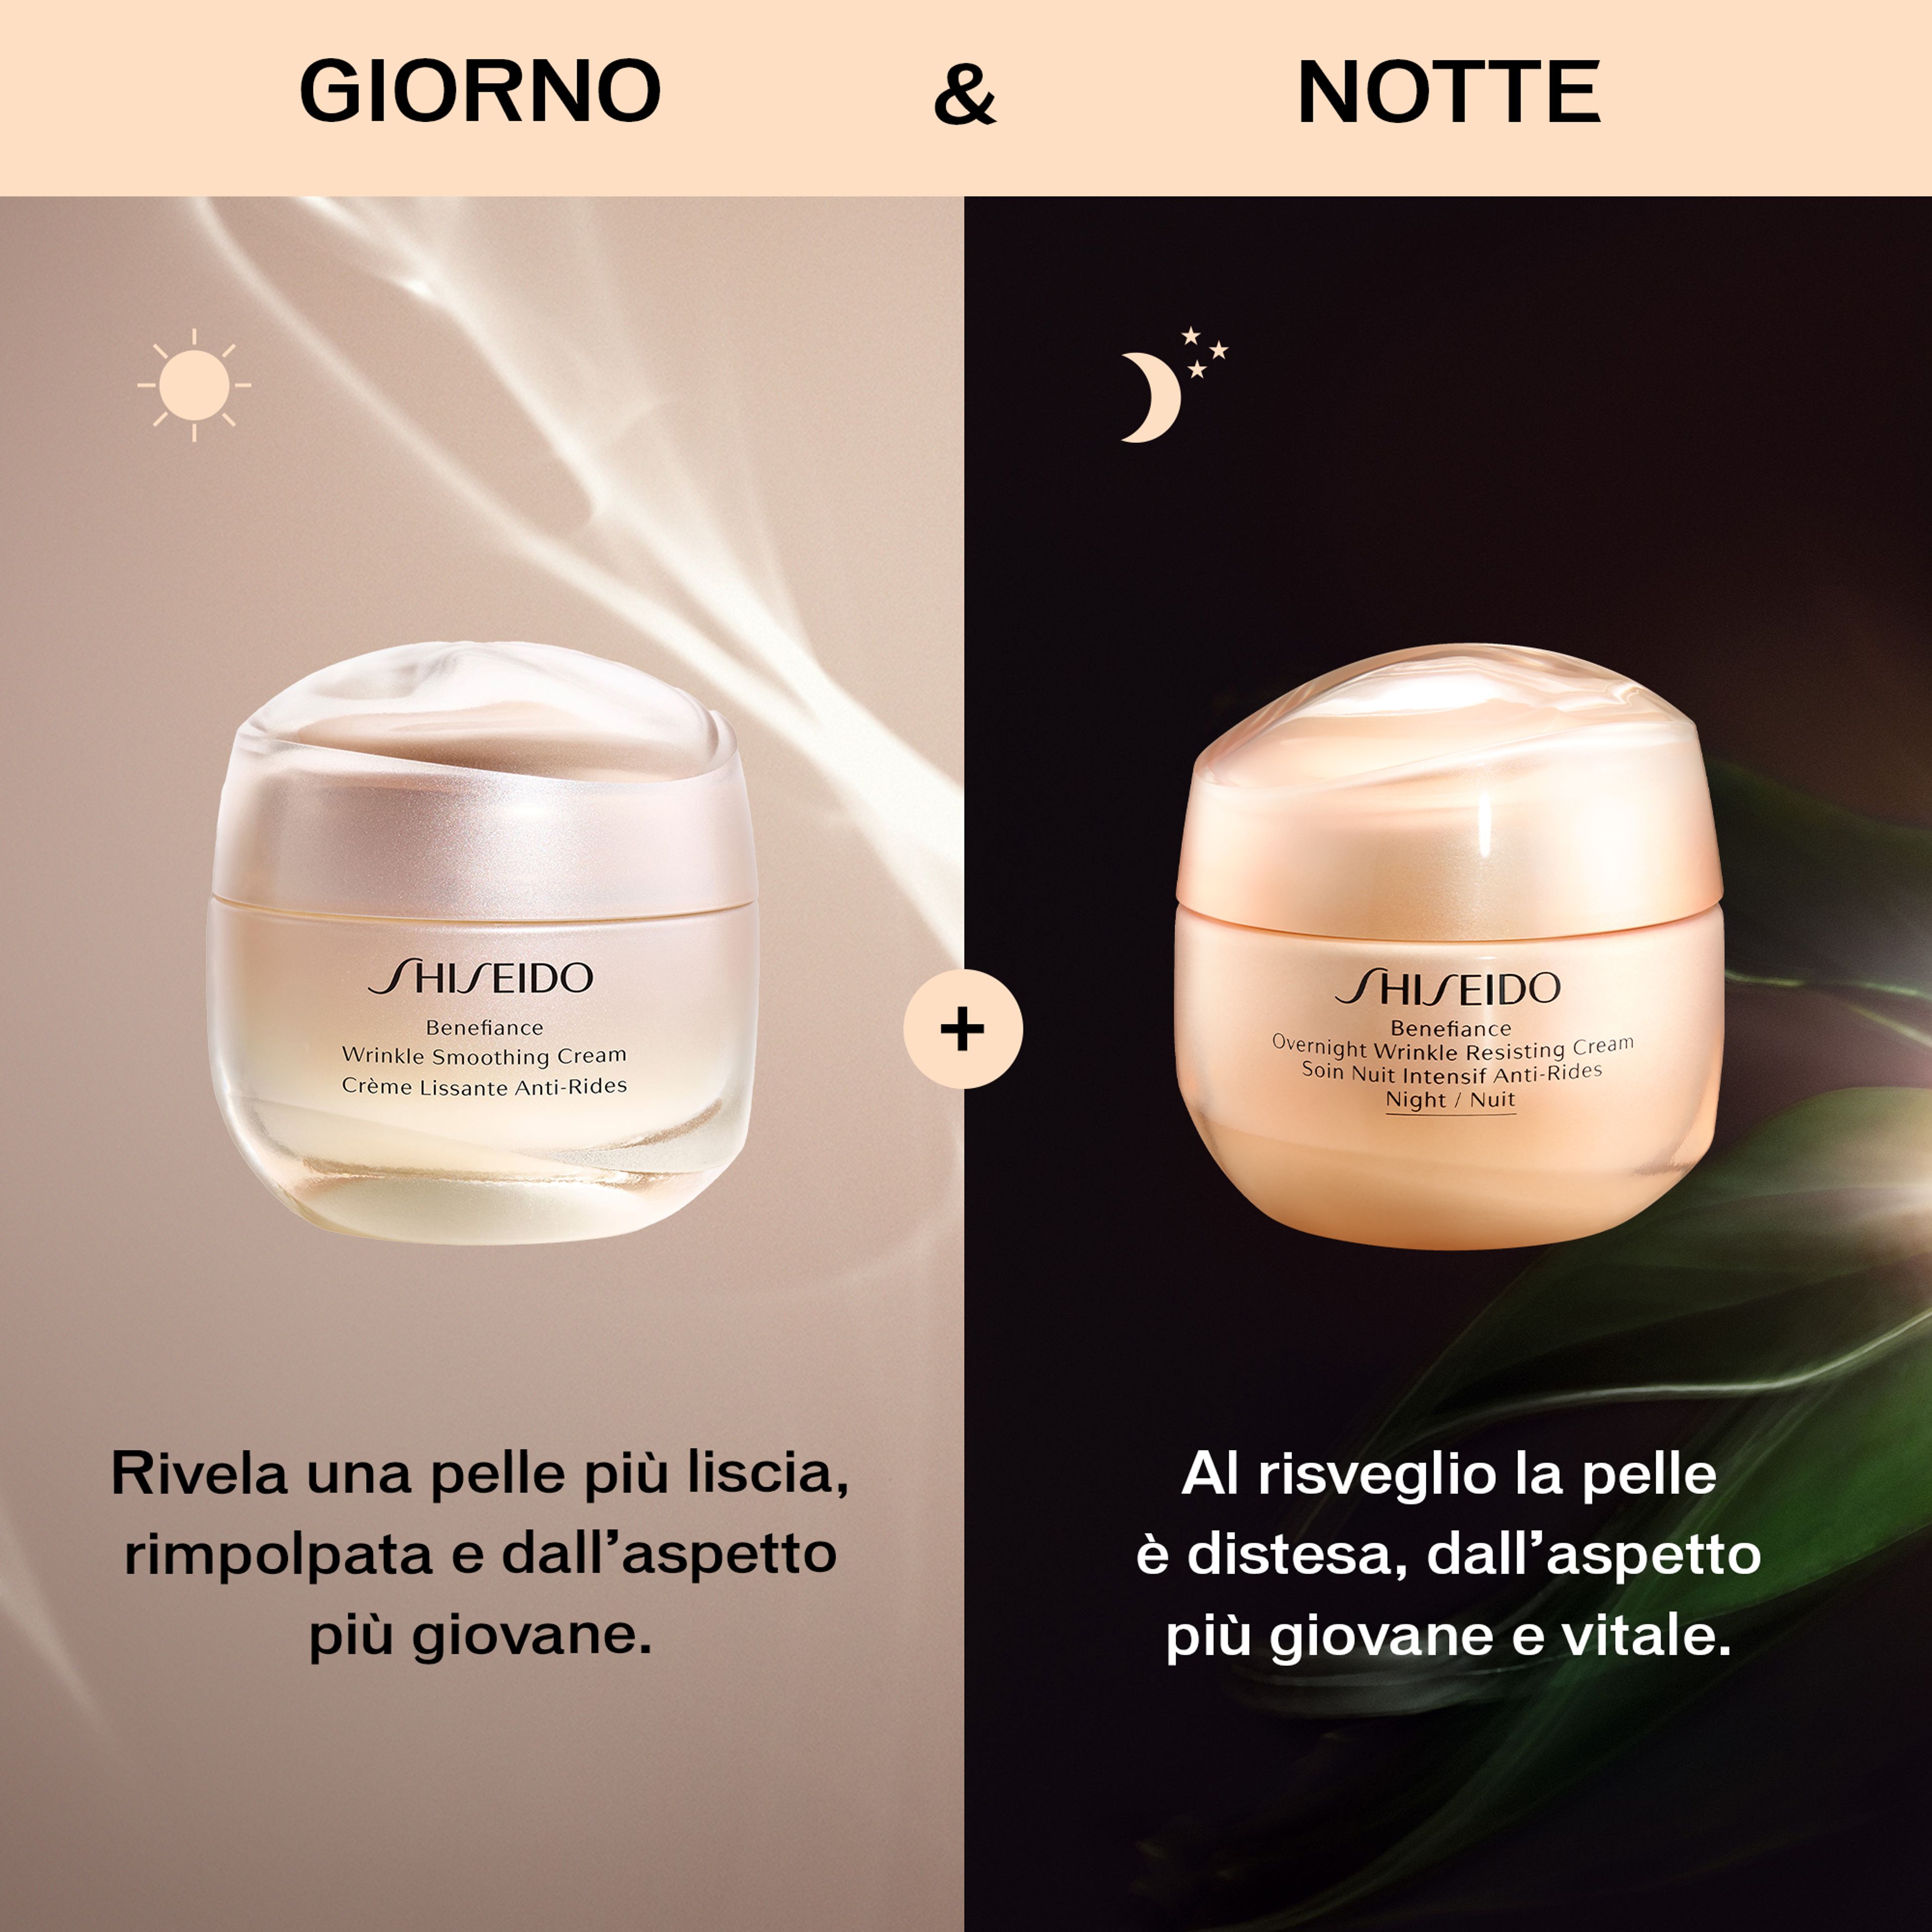 Shiseido Overnight Wrinkle Resisting Cream 5